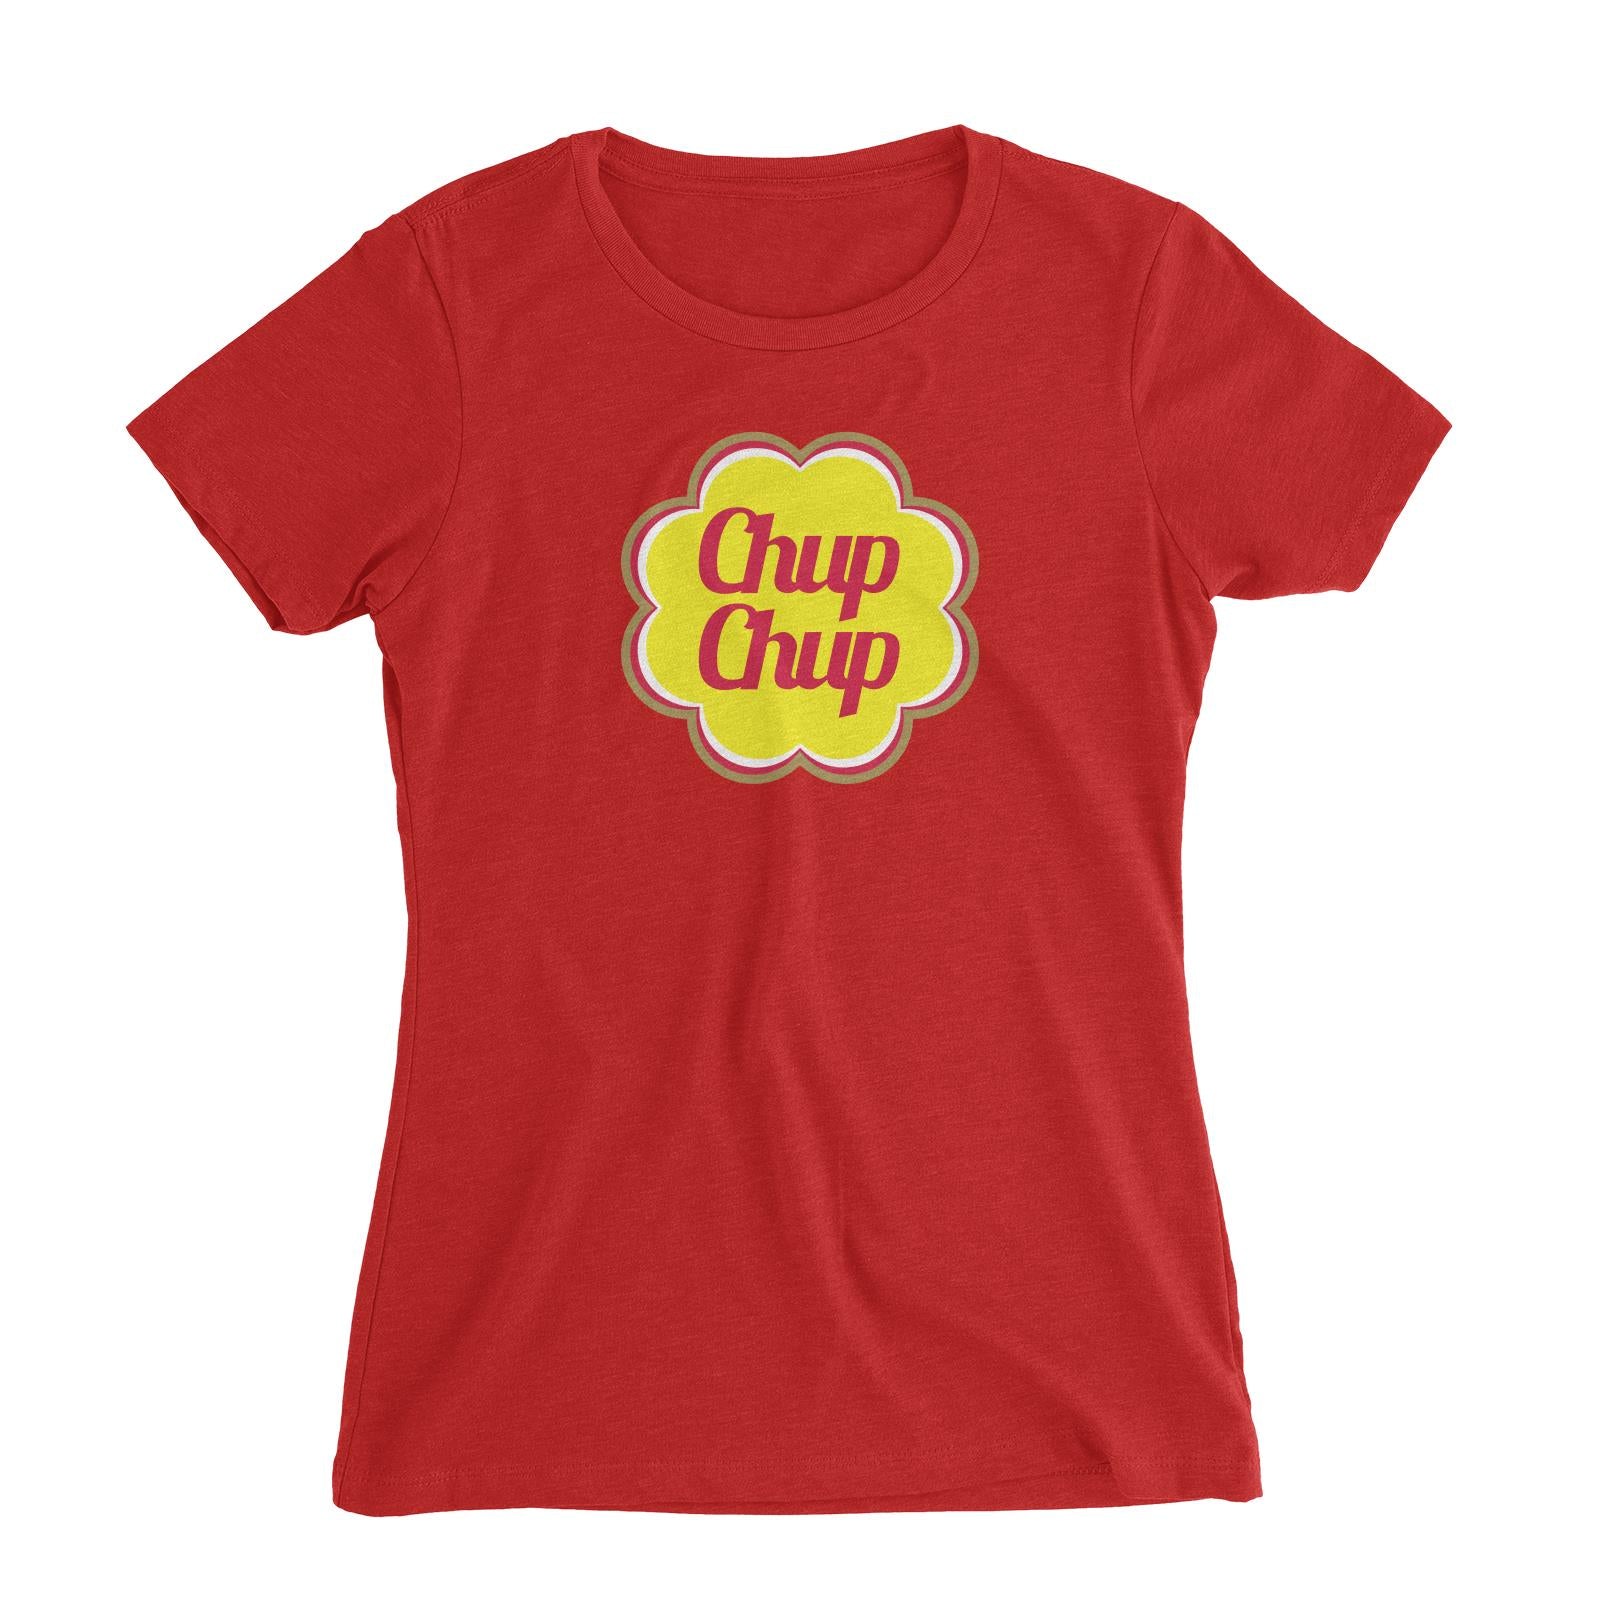 Slang Statement Chup Chup Women's Slim FIt T-Shirt